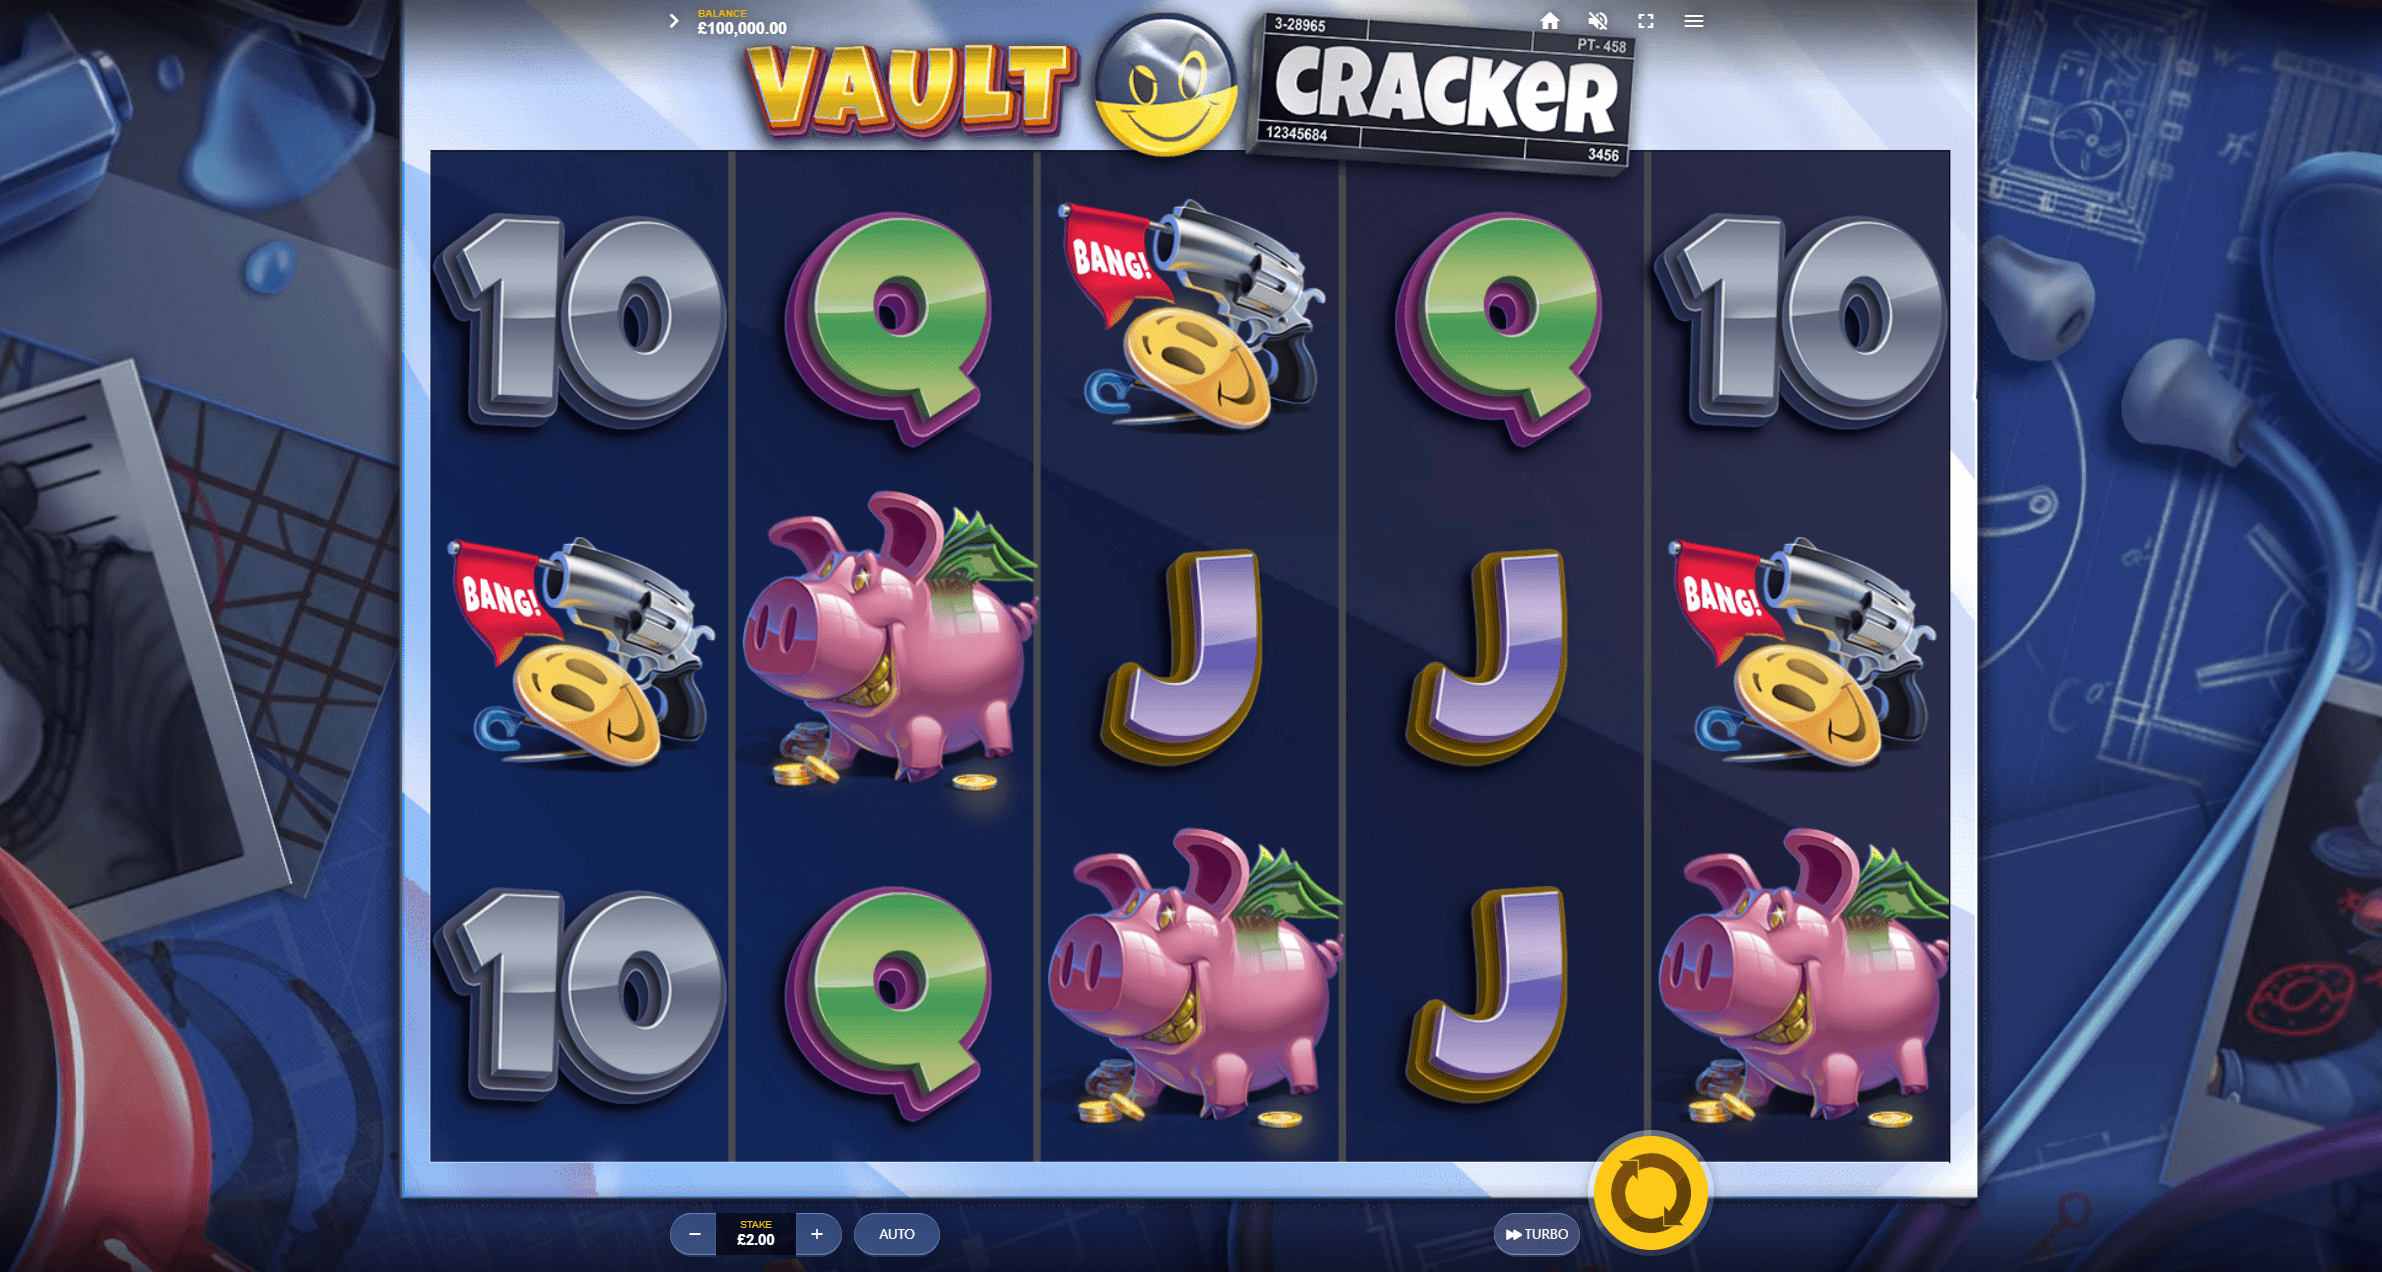 Vault Cracker slot